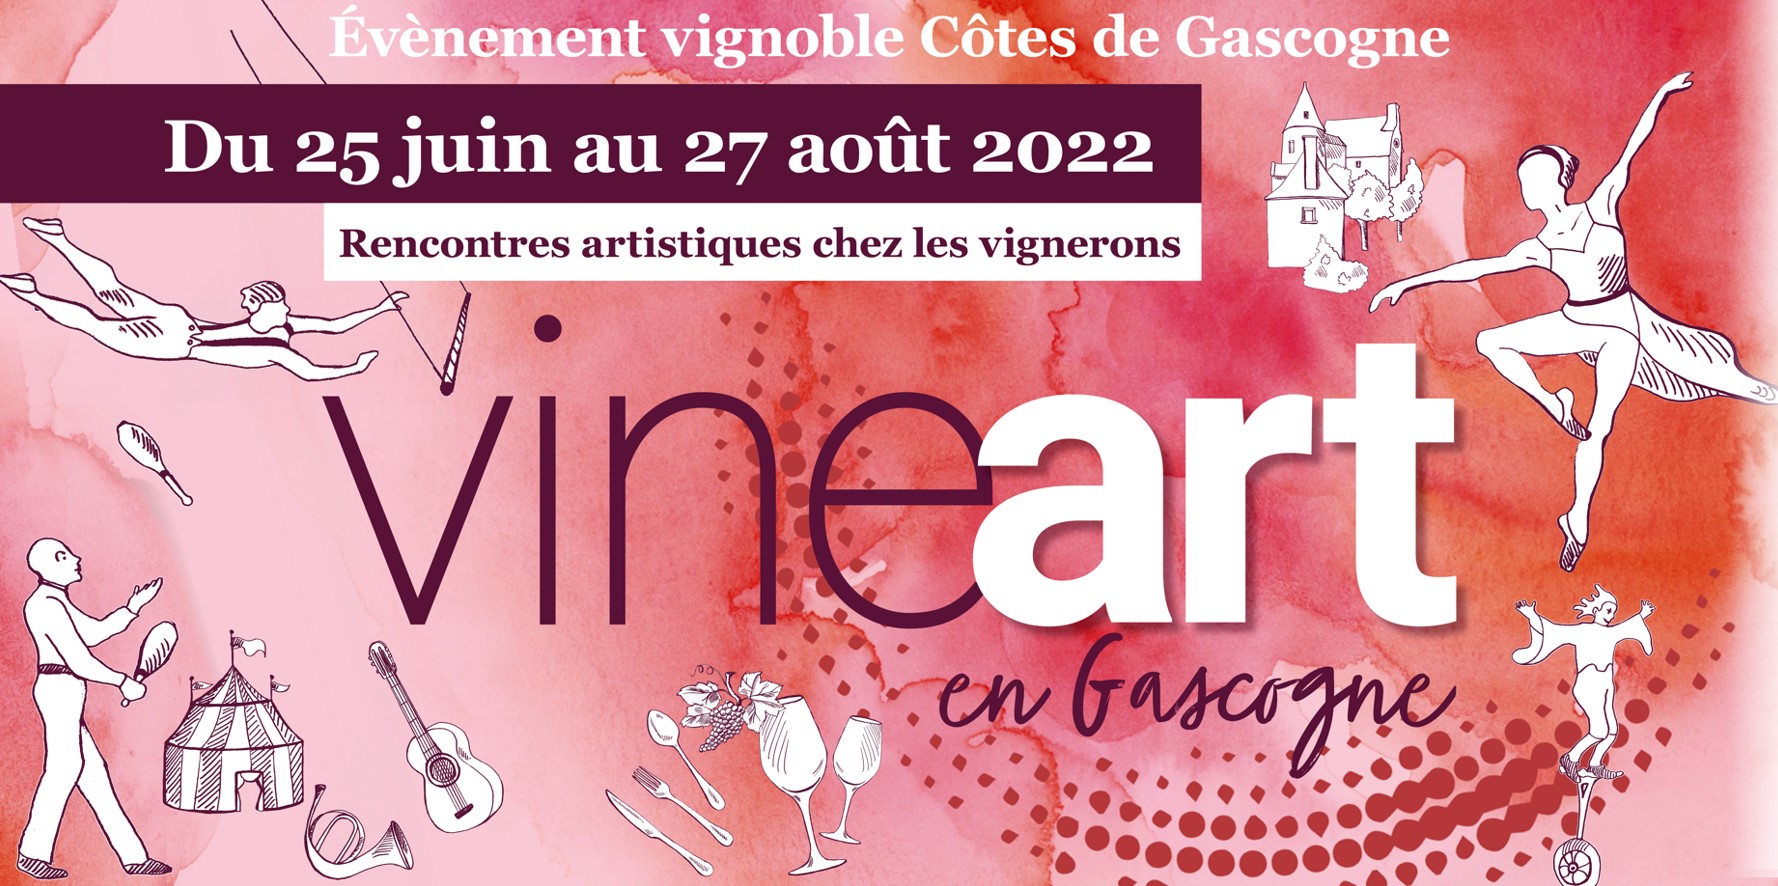 Gers - VineArt en Gascogne revient du samedi 25 juin au samedi 27 août 2022 !